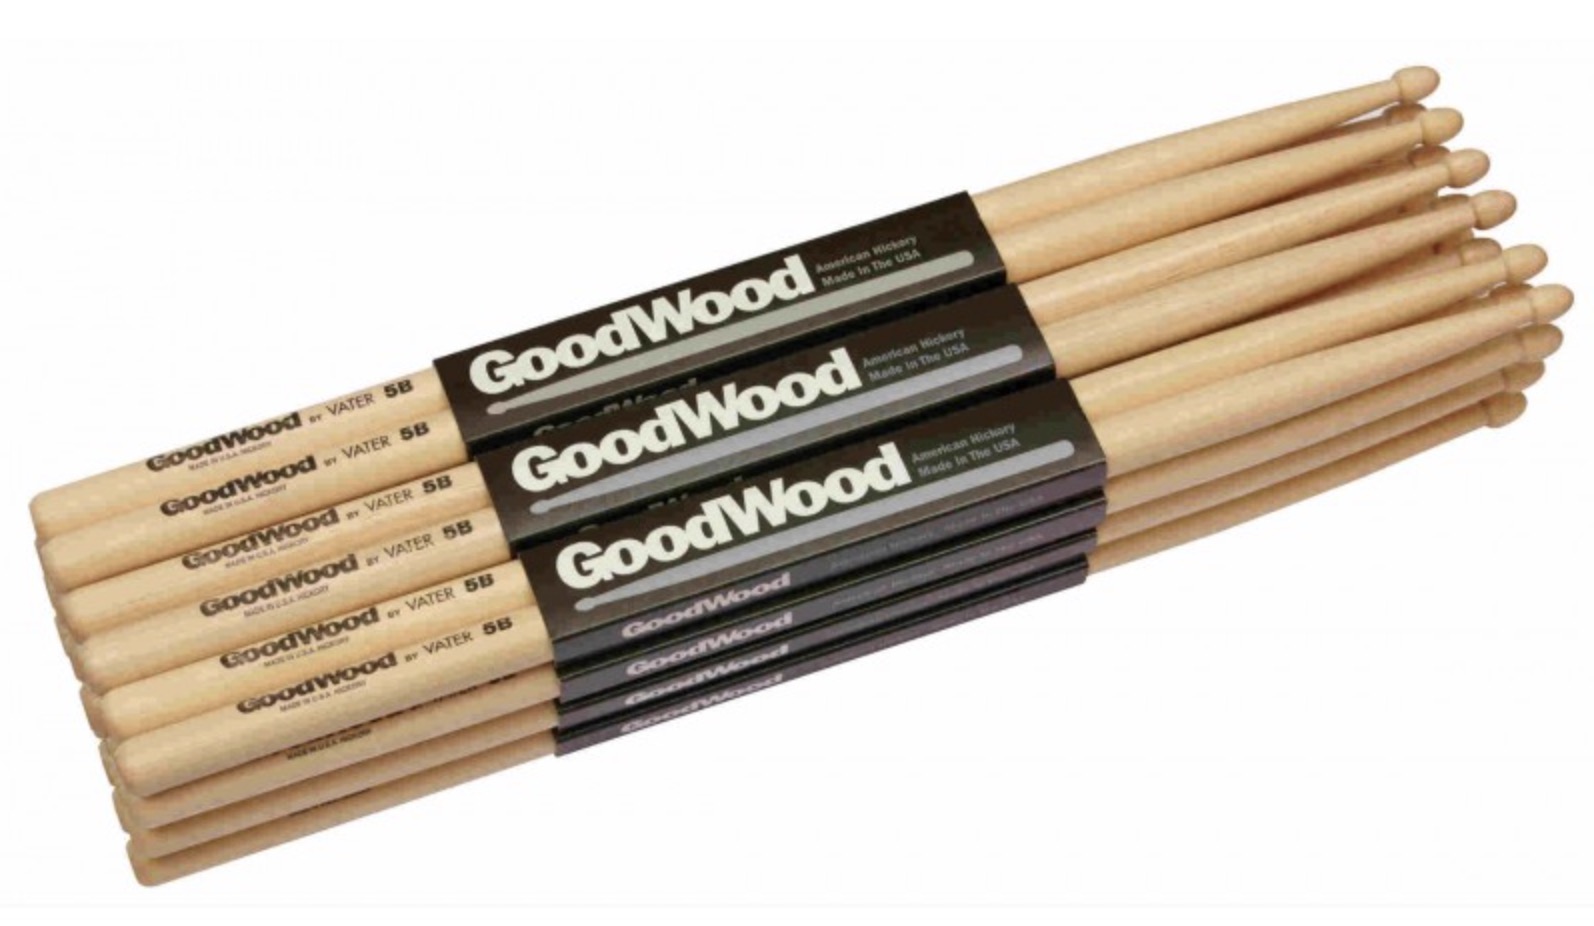 Goodwood (by Vater) gw5a 5a set drumstokken